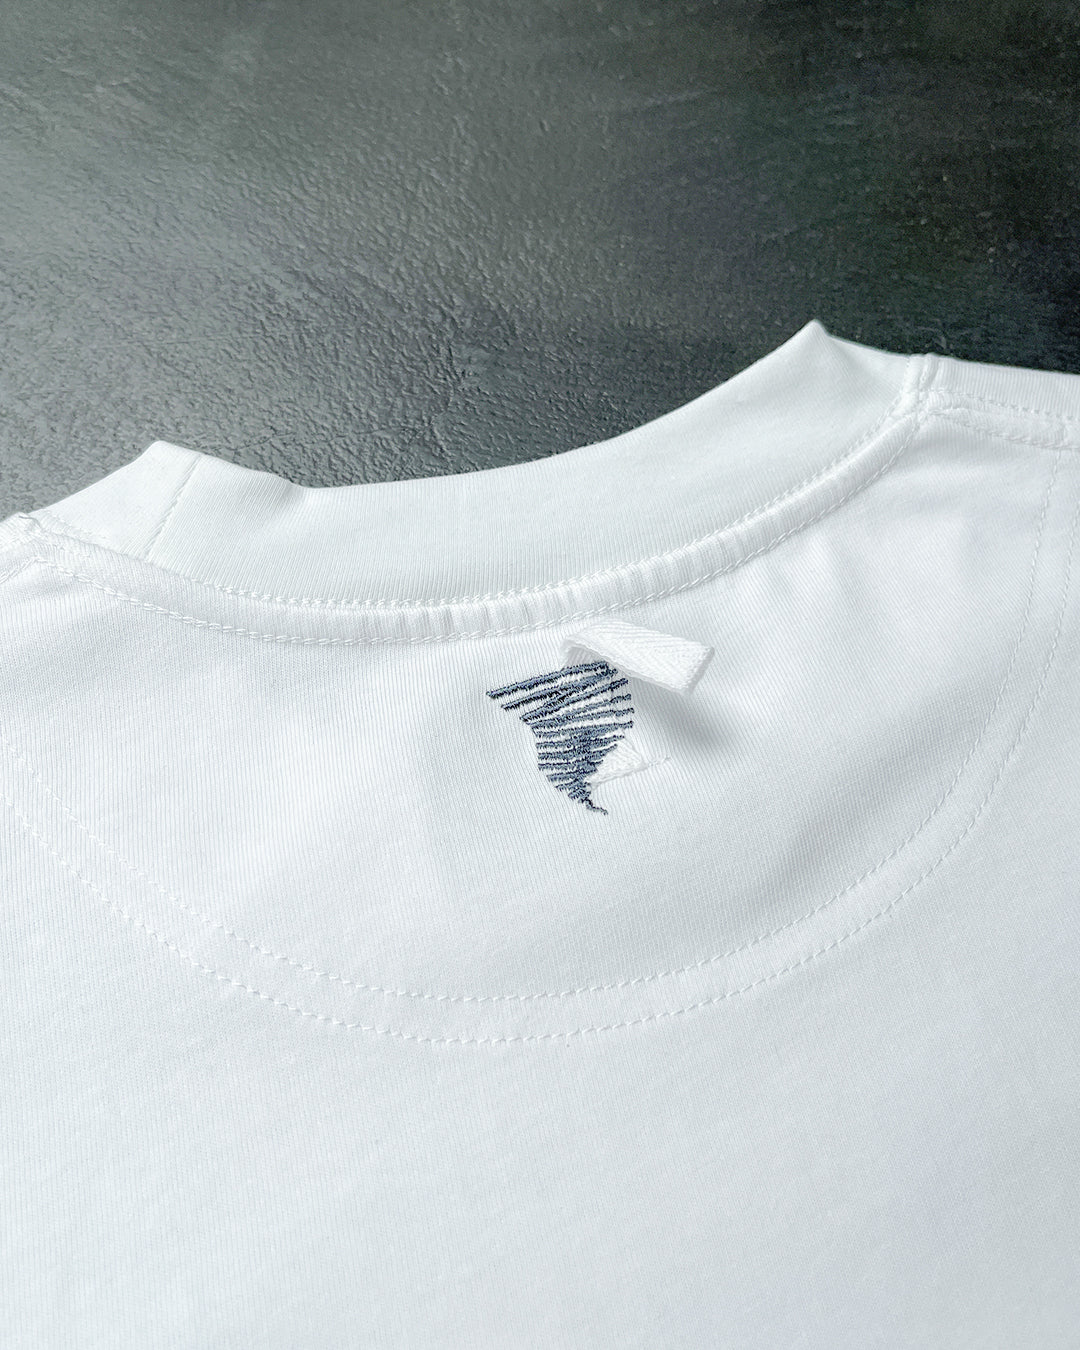 Carhartt WIP x Invincible S/S 15 Pocket T-Shirt White - UNIFORM